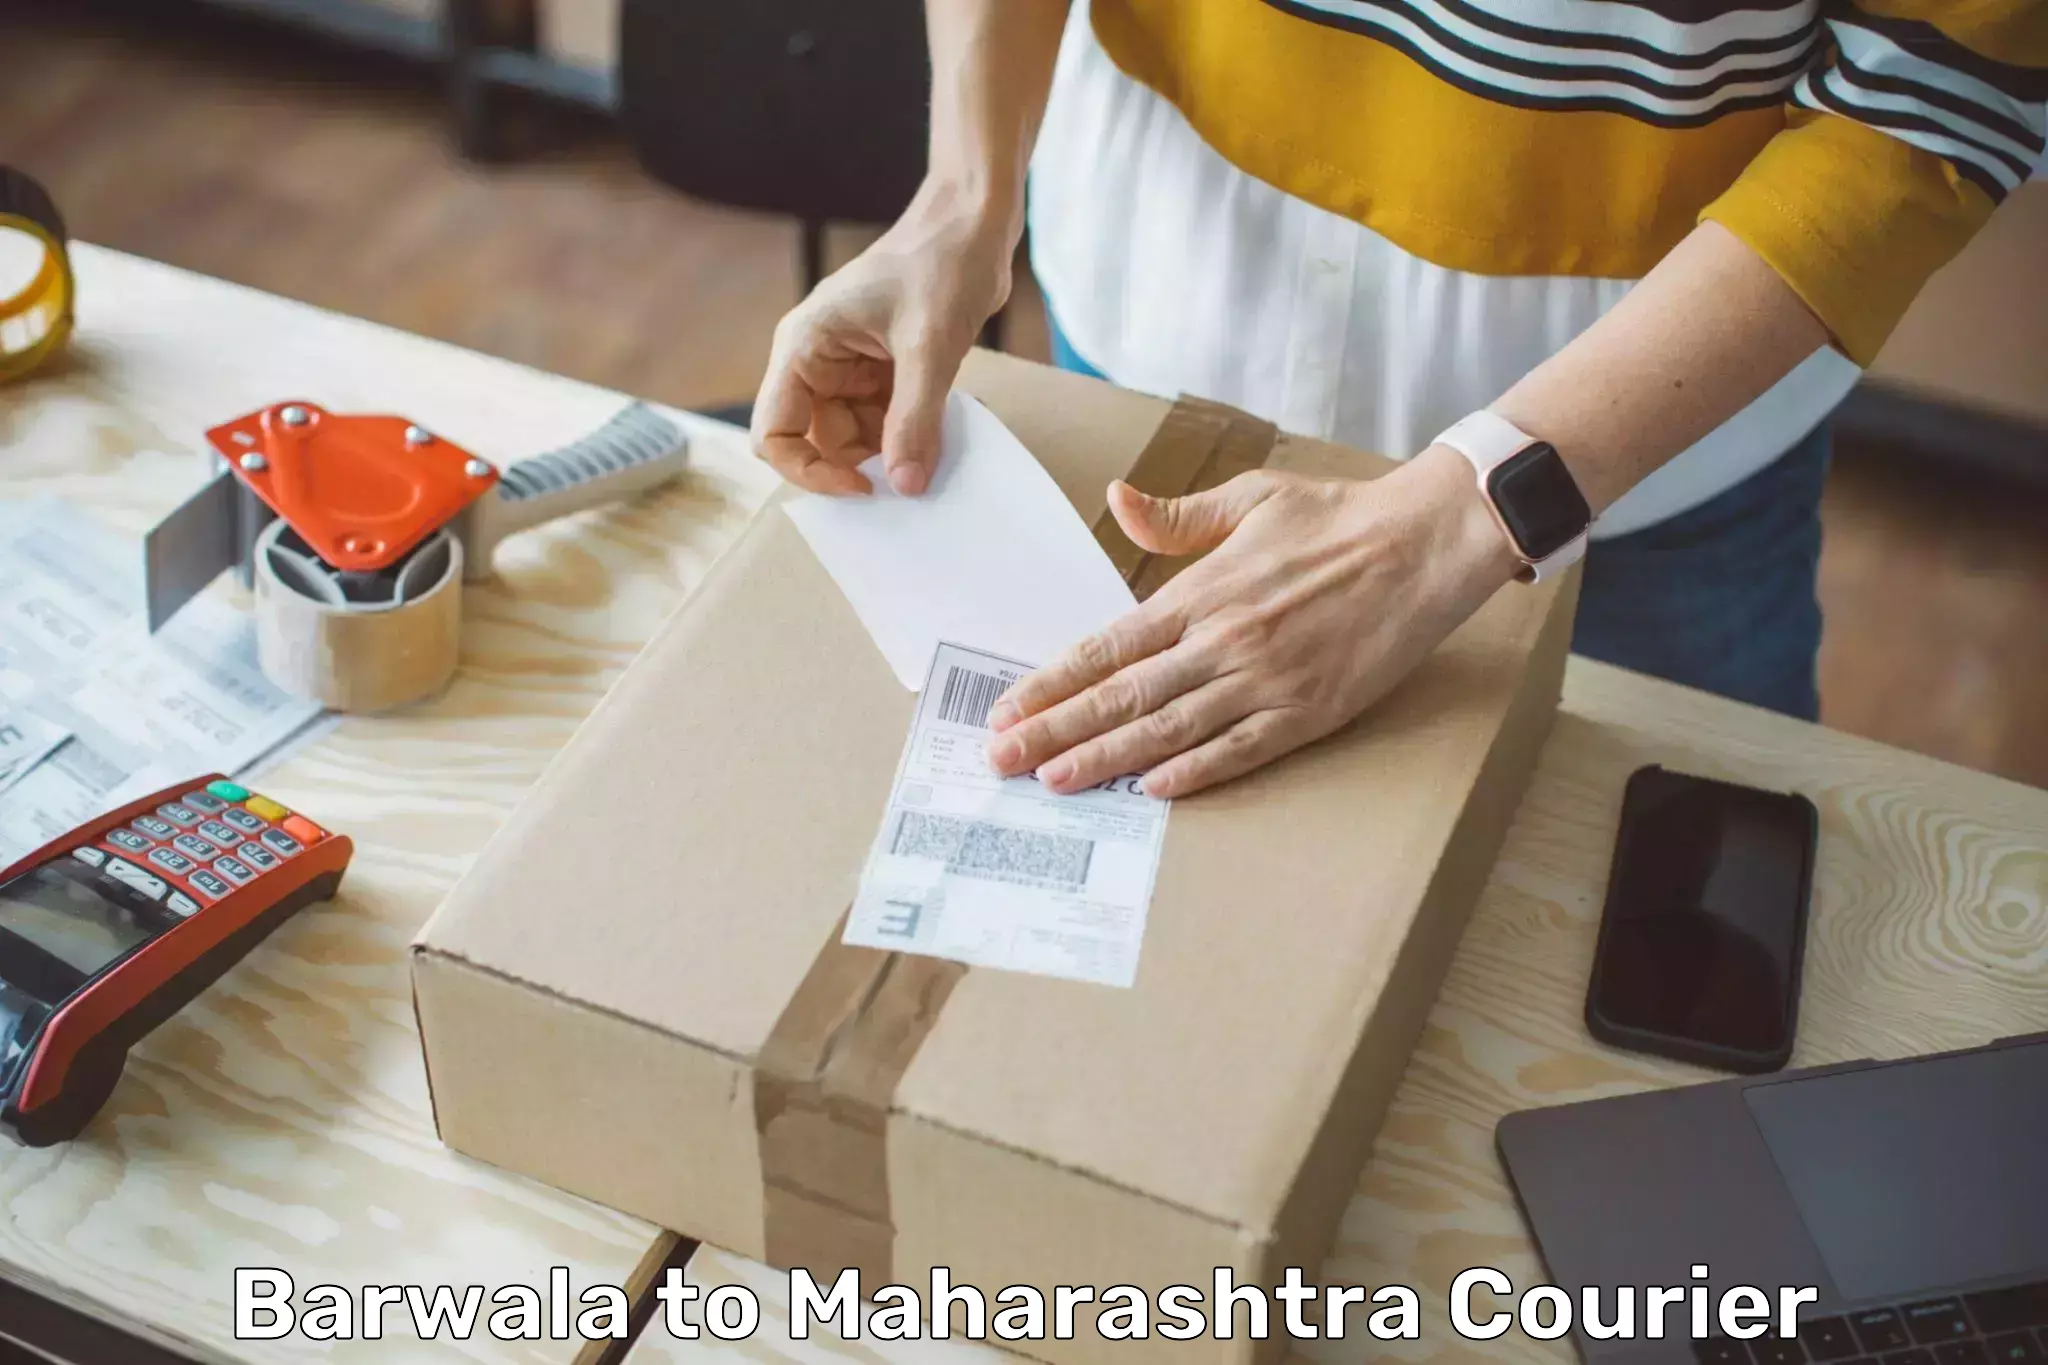 Bulk courier orders in Barwala to Mumbai